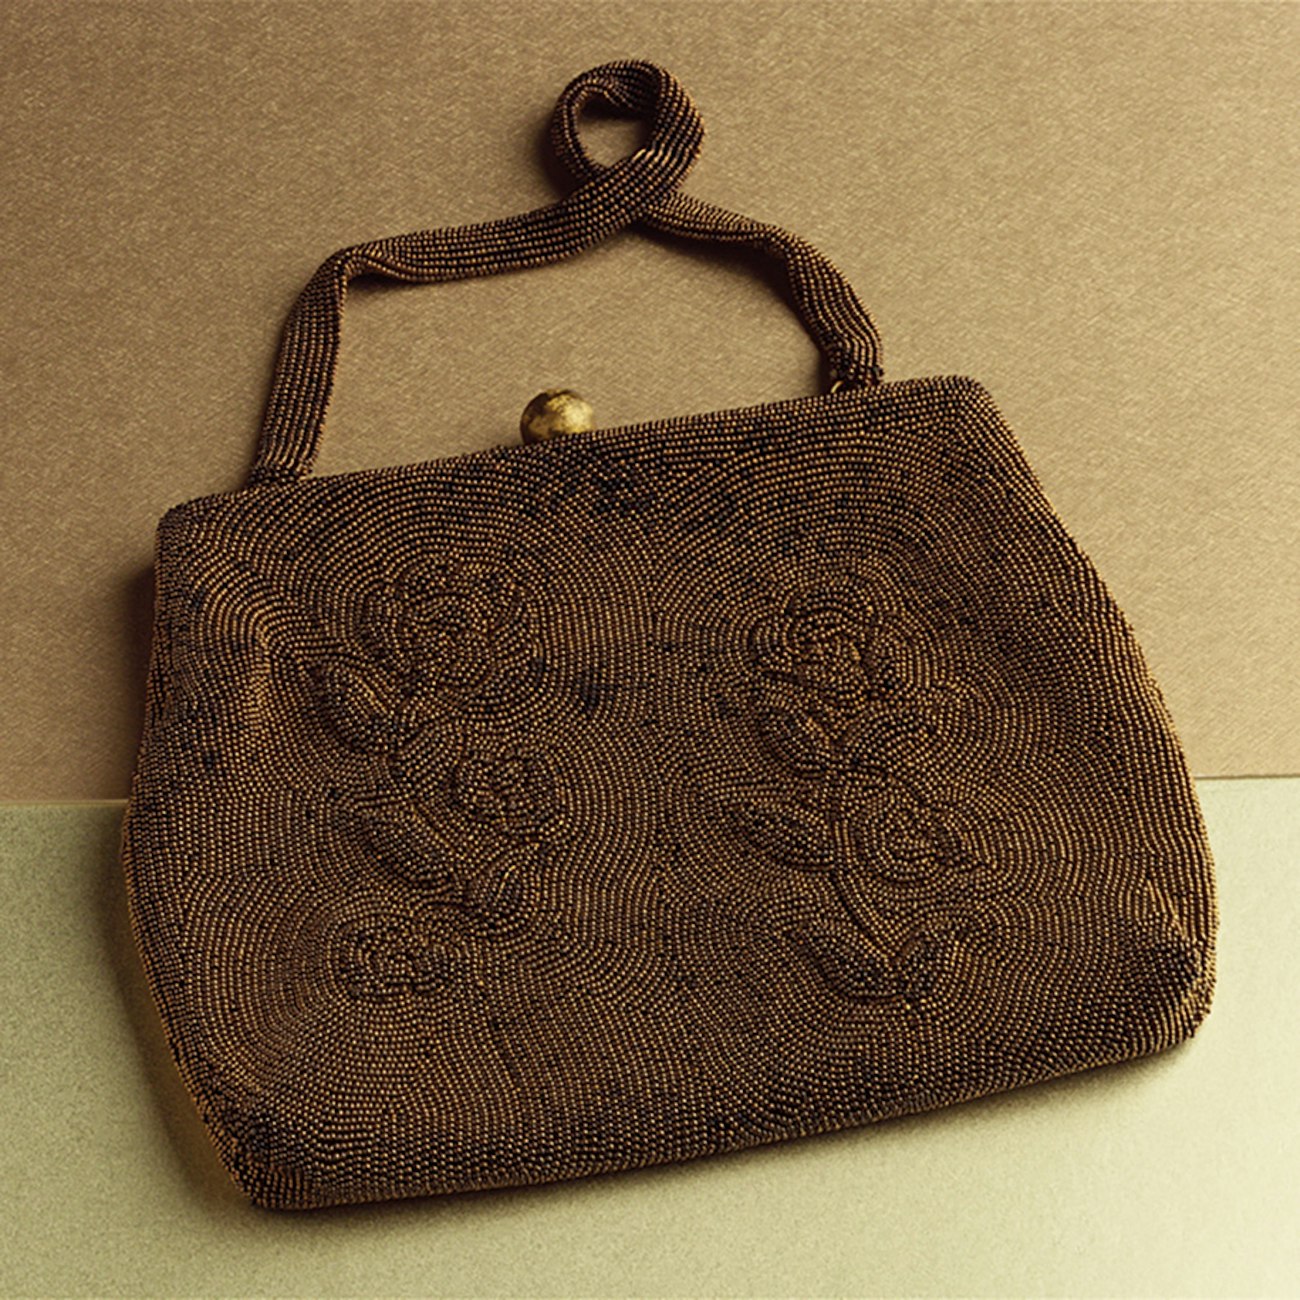 FLORAL BUTTERFLIES by New Vintage Handbags